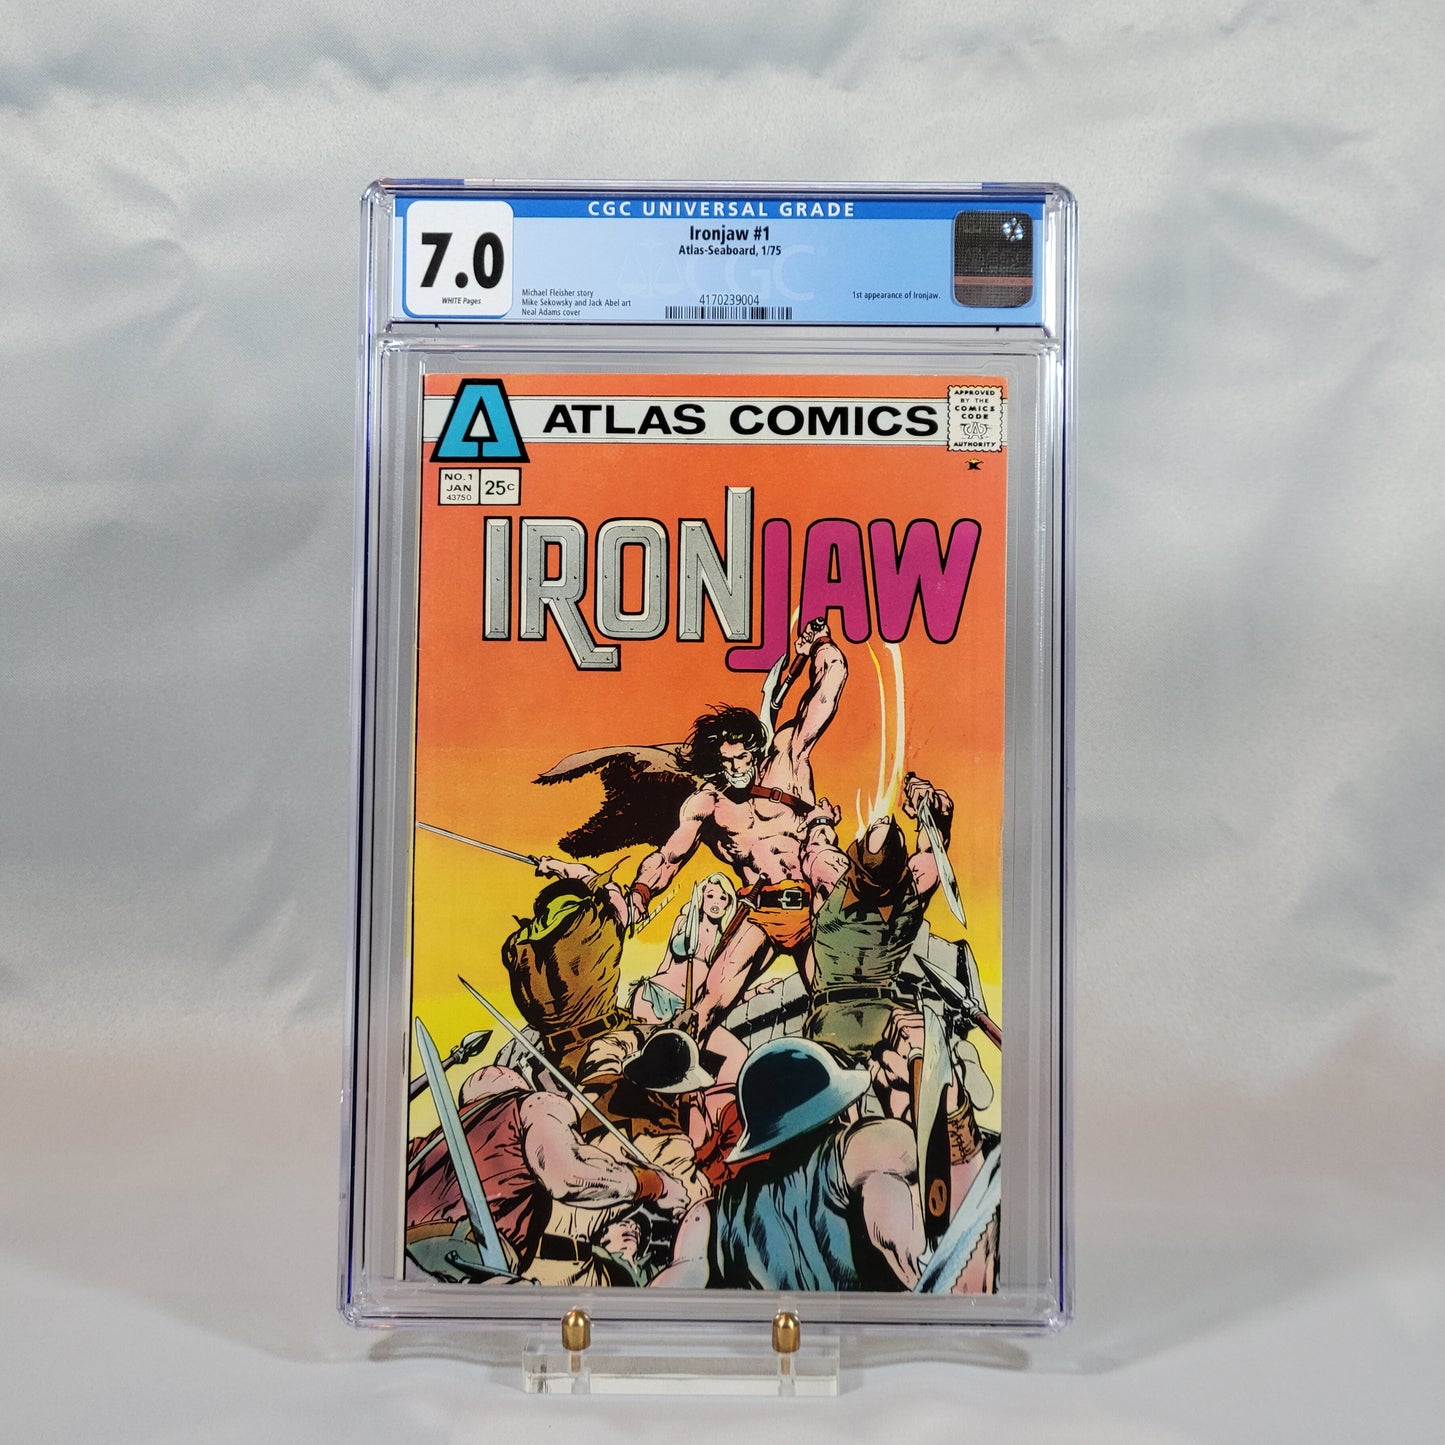 IronJaw #1 (Atlas Comics)